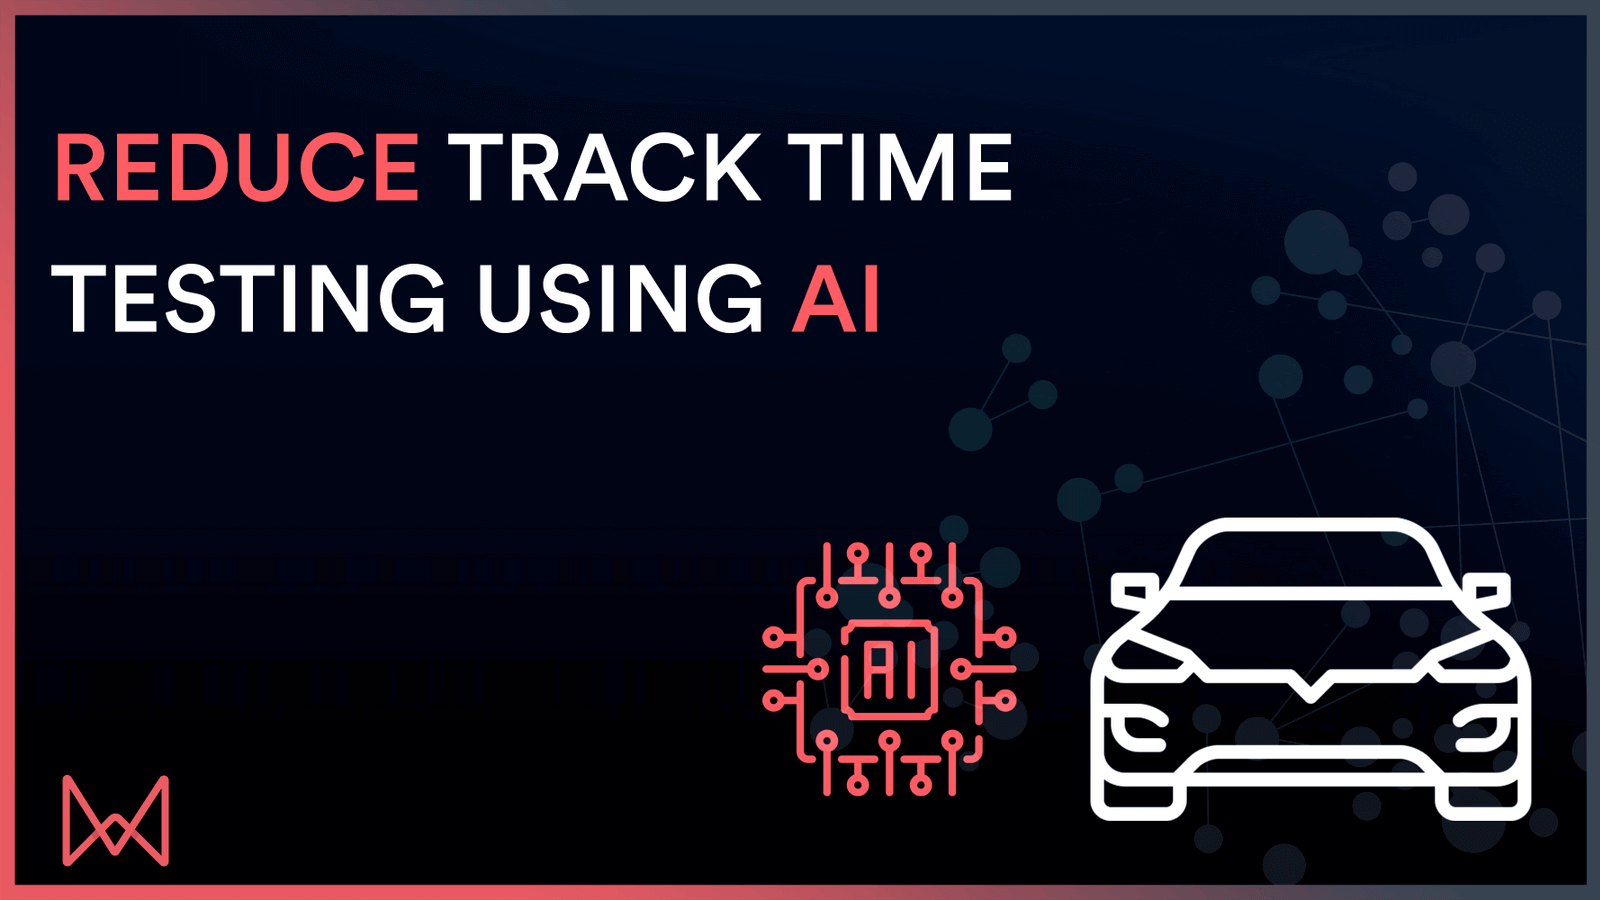 Whitepaper_reduce track time testing using AI 